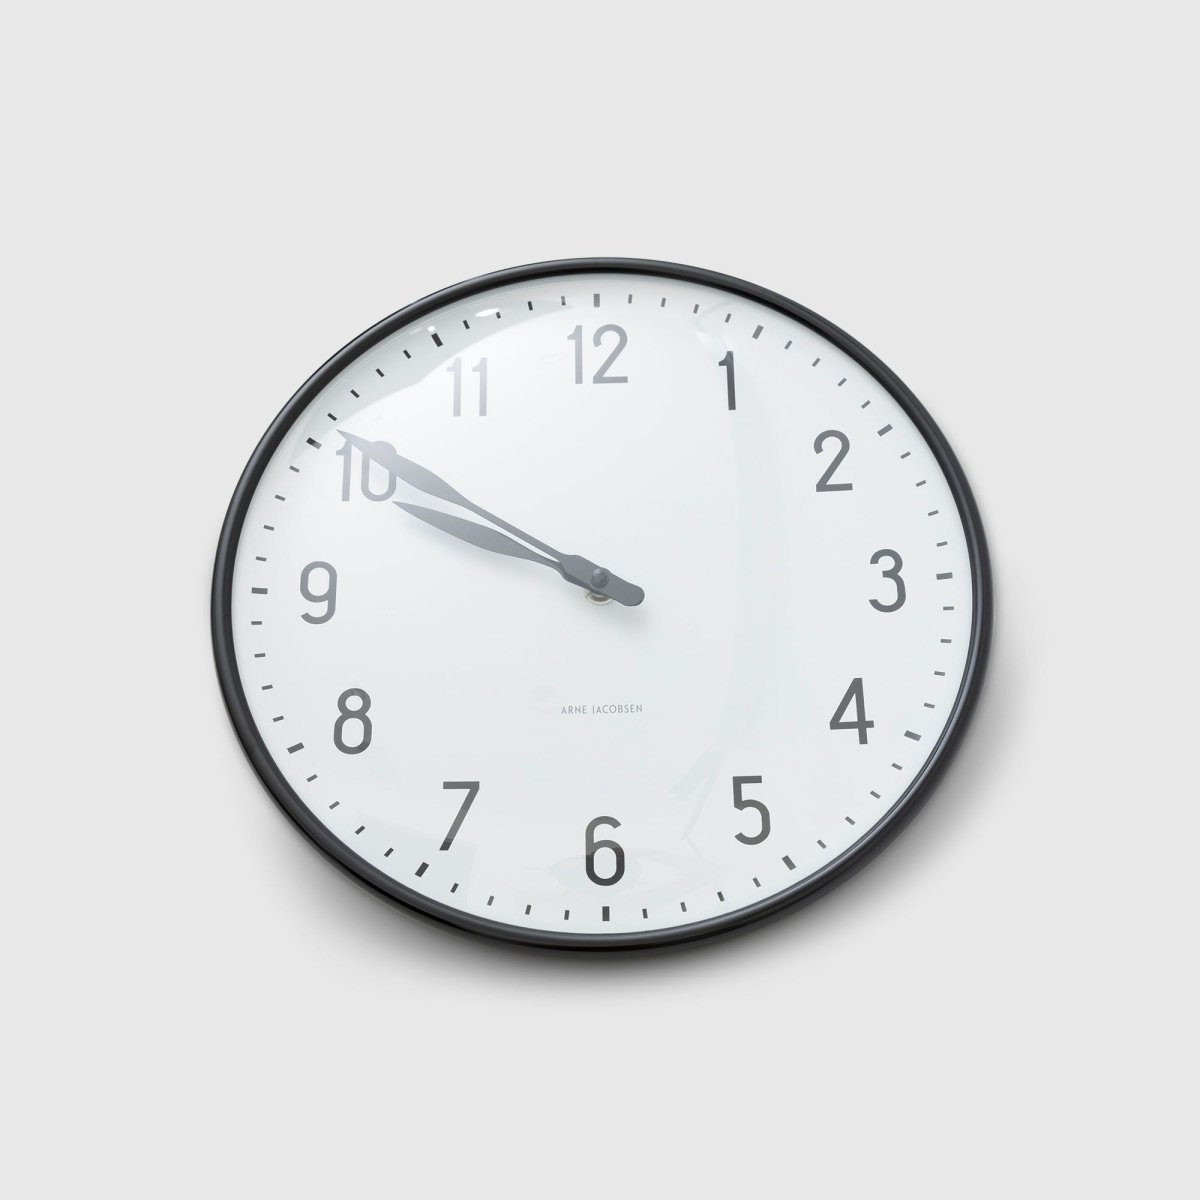 Arne Jacobsen - Station Wall Clock - Autotype